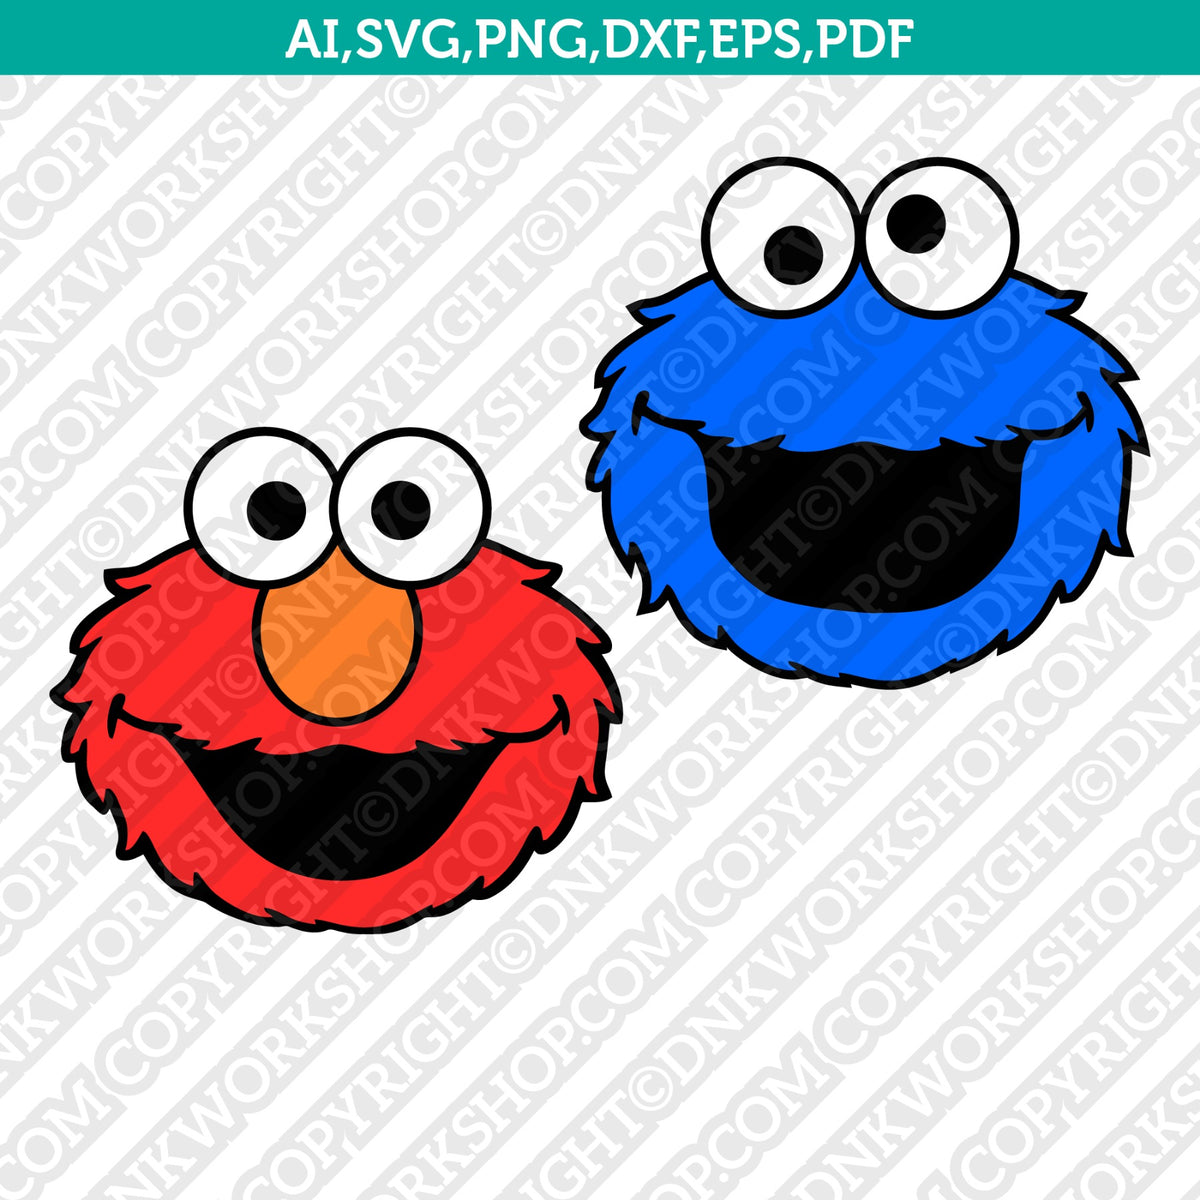 Elmo Cookie Monster Face Sesame Street SVG Sticker Decal Silhouette Ca